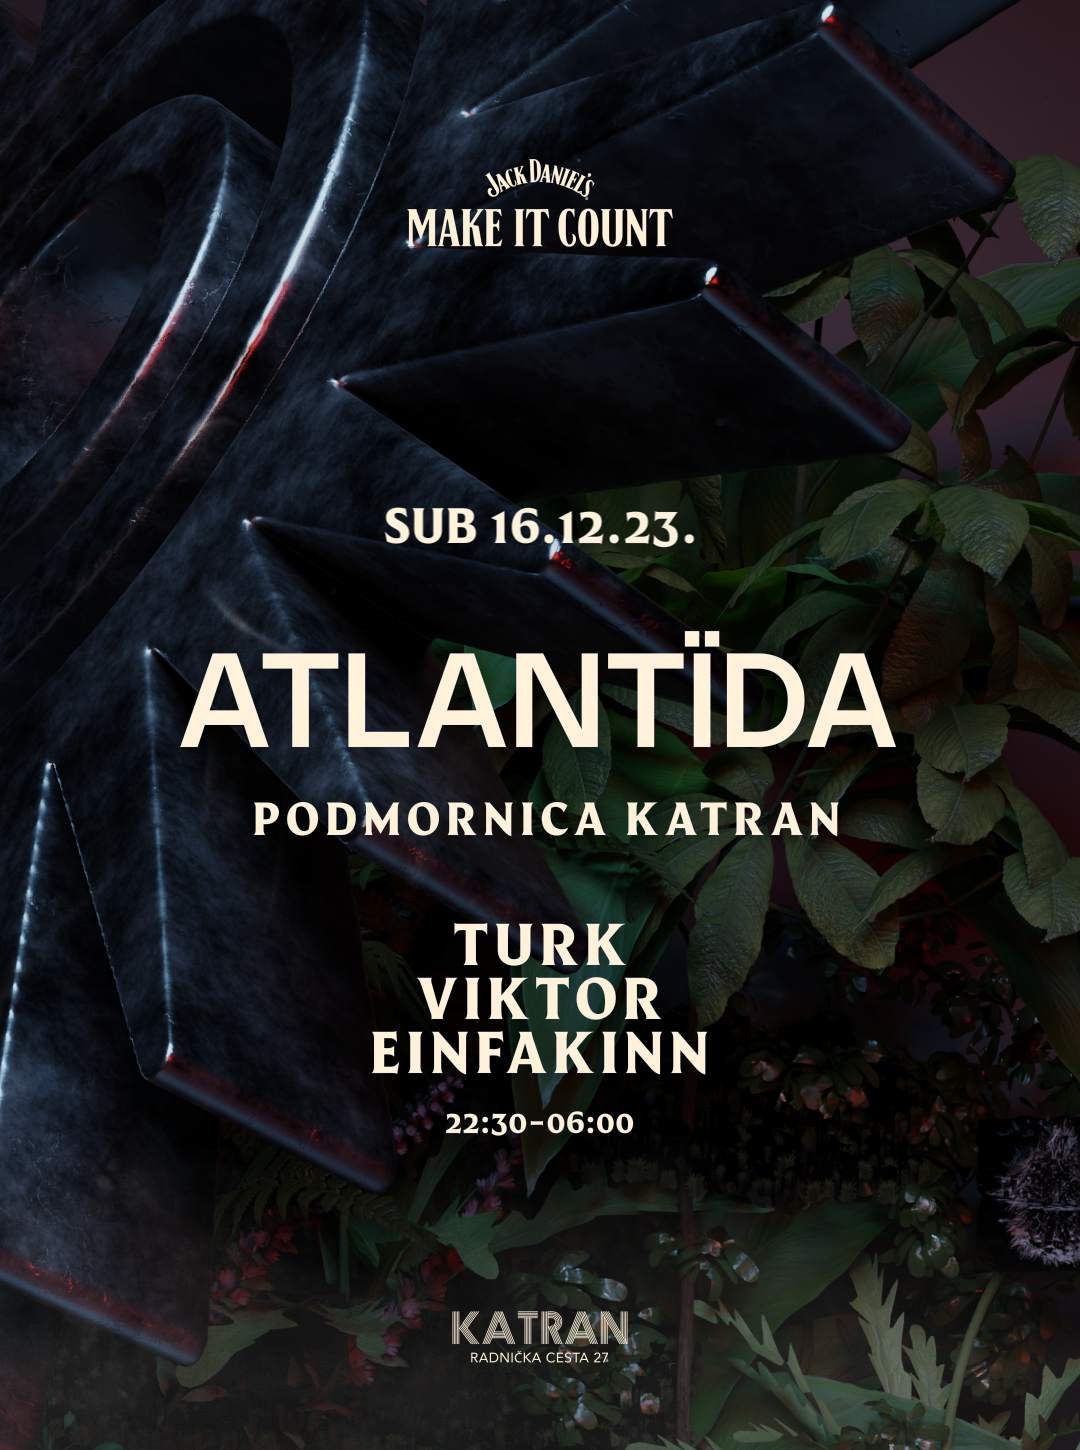 ATLANTIDA - Podmornica Katran - フライヤー表